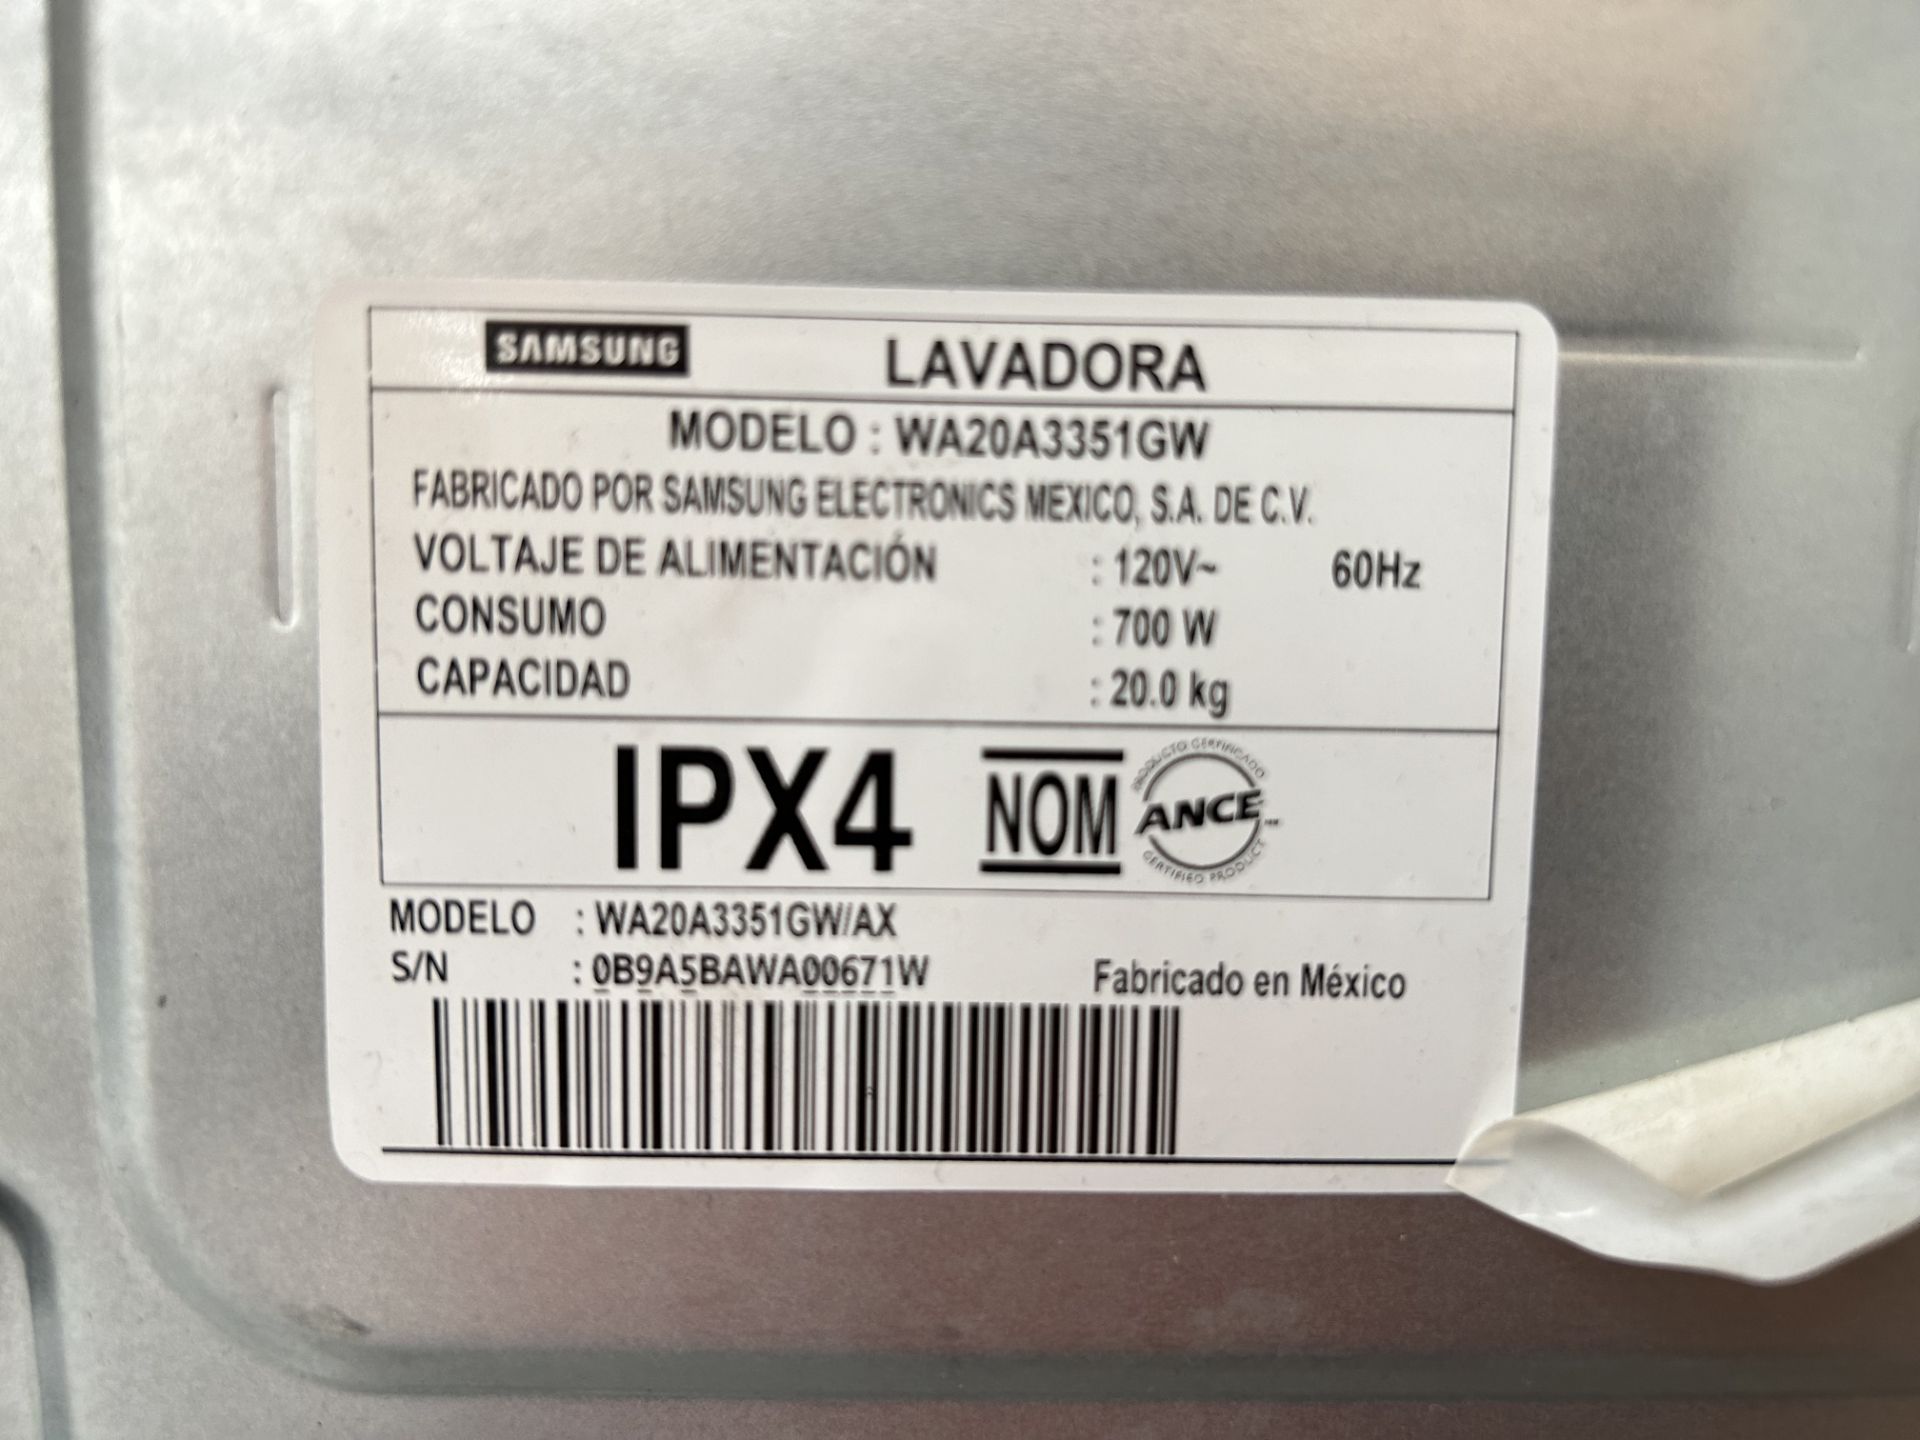 Lavadora de 20 Kg Marca SAMSUNG, Modelo WA20A3551GW, Serie 00671W, Color BLANCO (Equipo de devoluci - Image 6 of 8